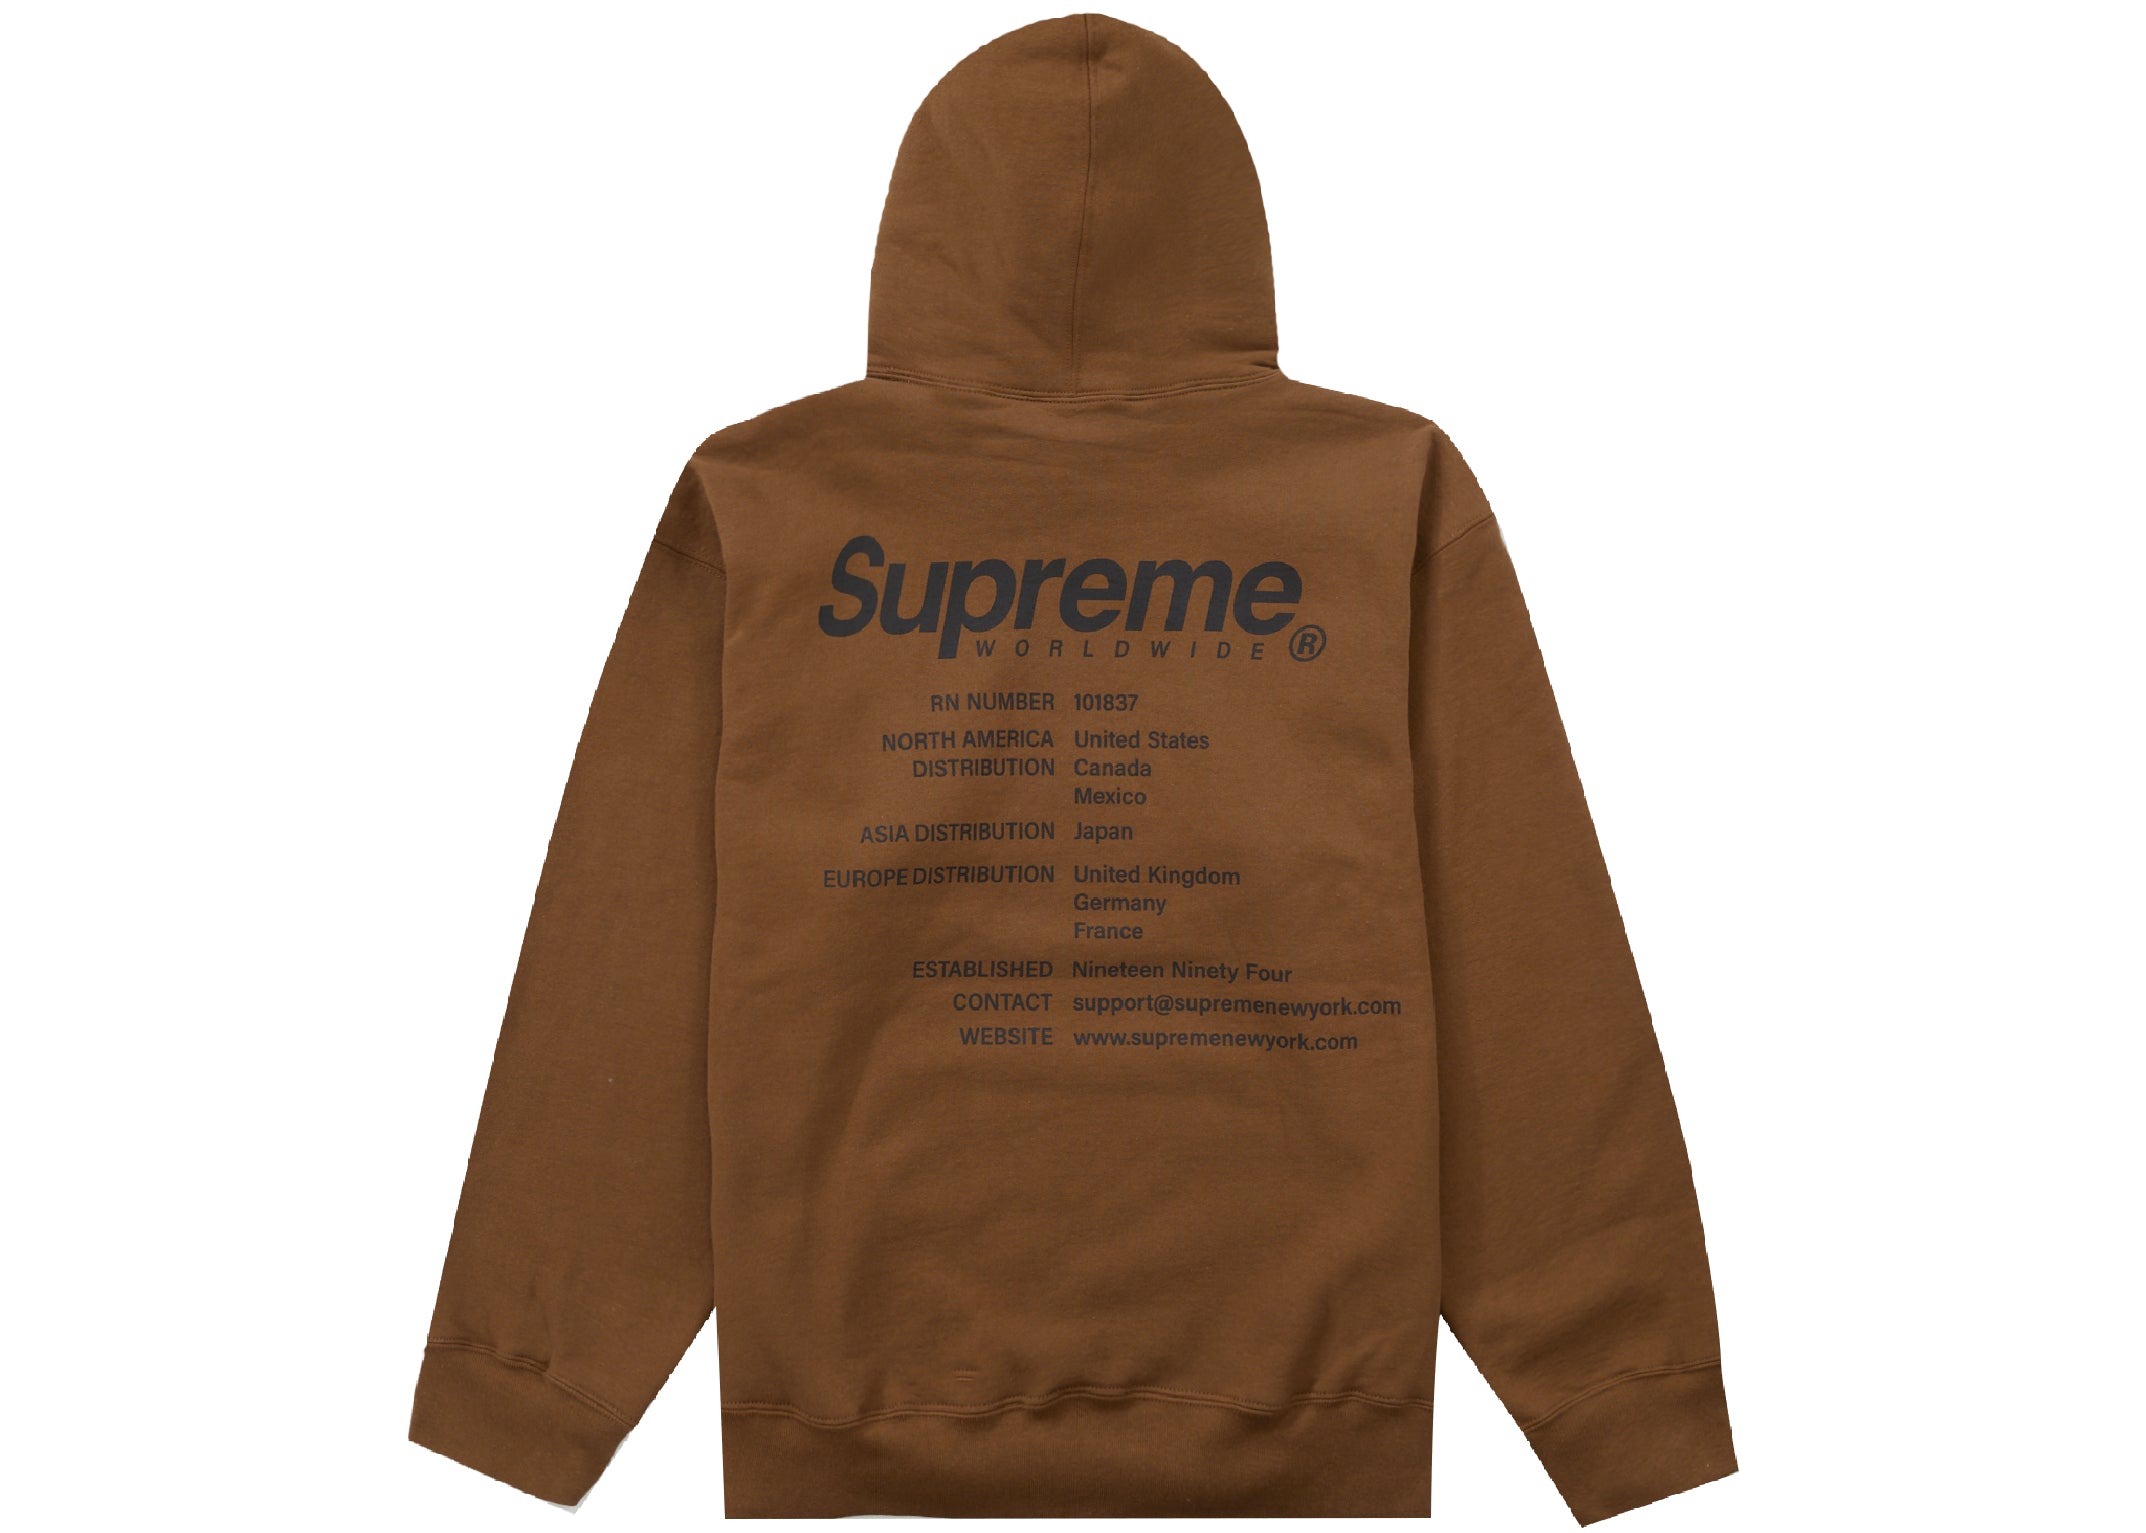 Supreme Worldwide Hooded Sweatshirt Olive Brown